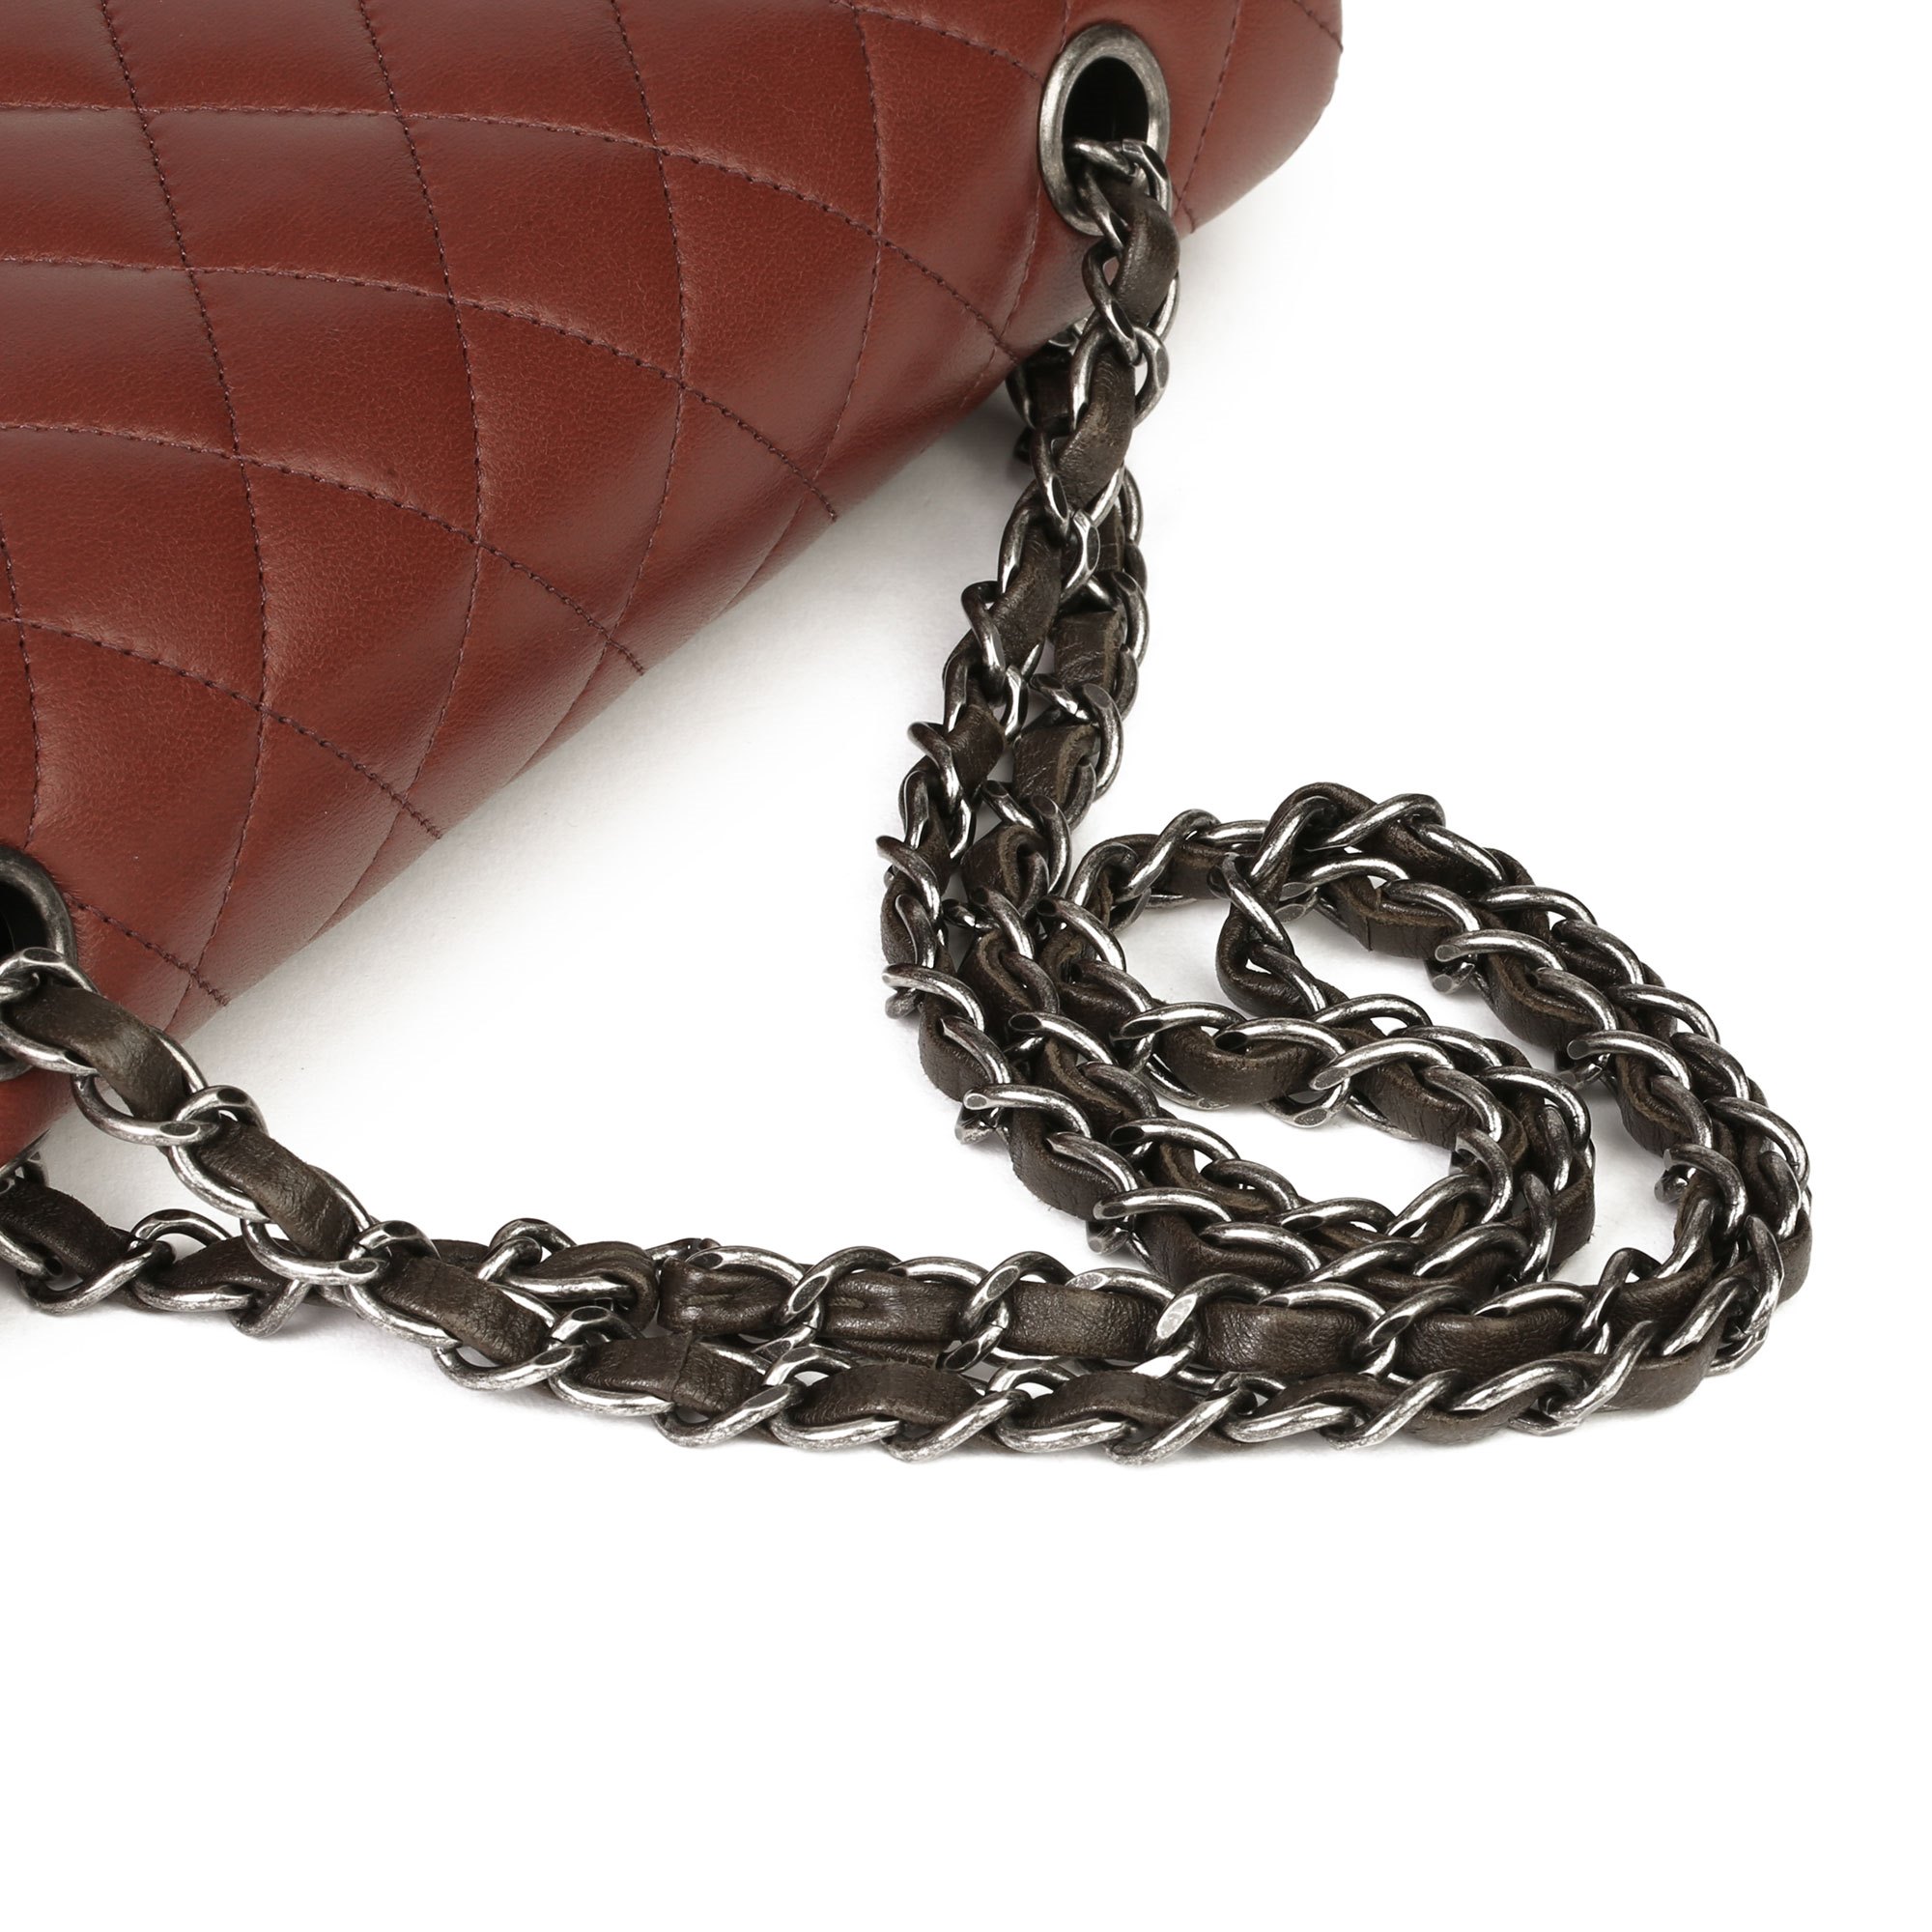 Chanel Burgundy, Black & Khaki Lambskin Medium Classic Double Flap Bag